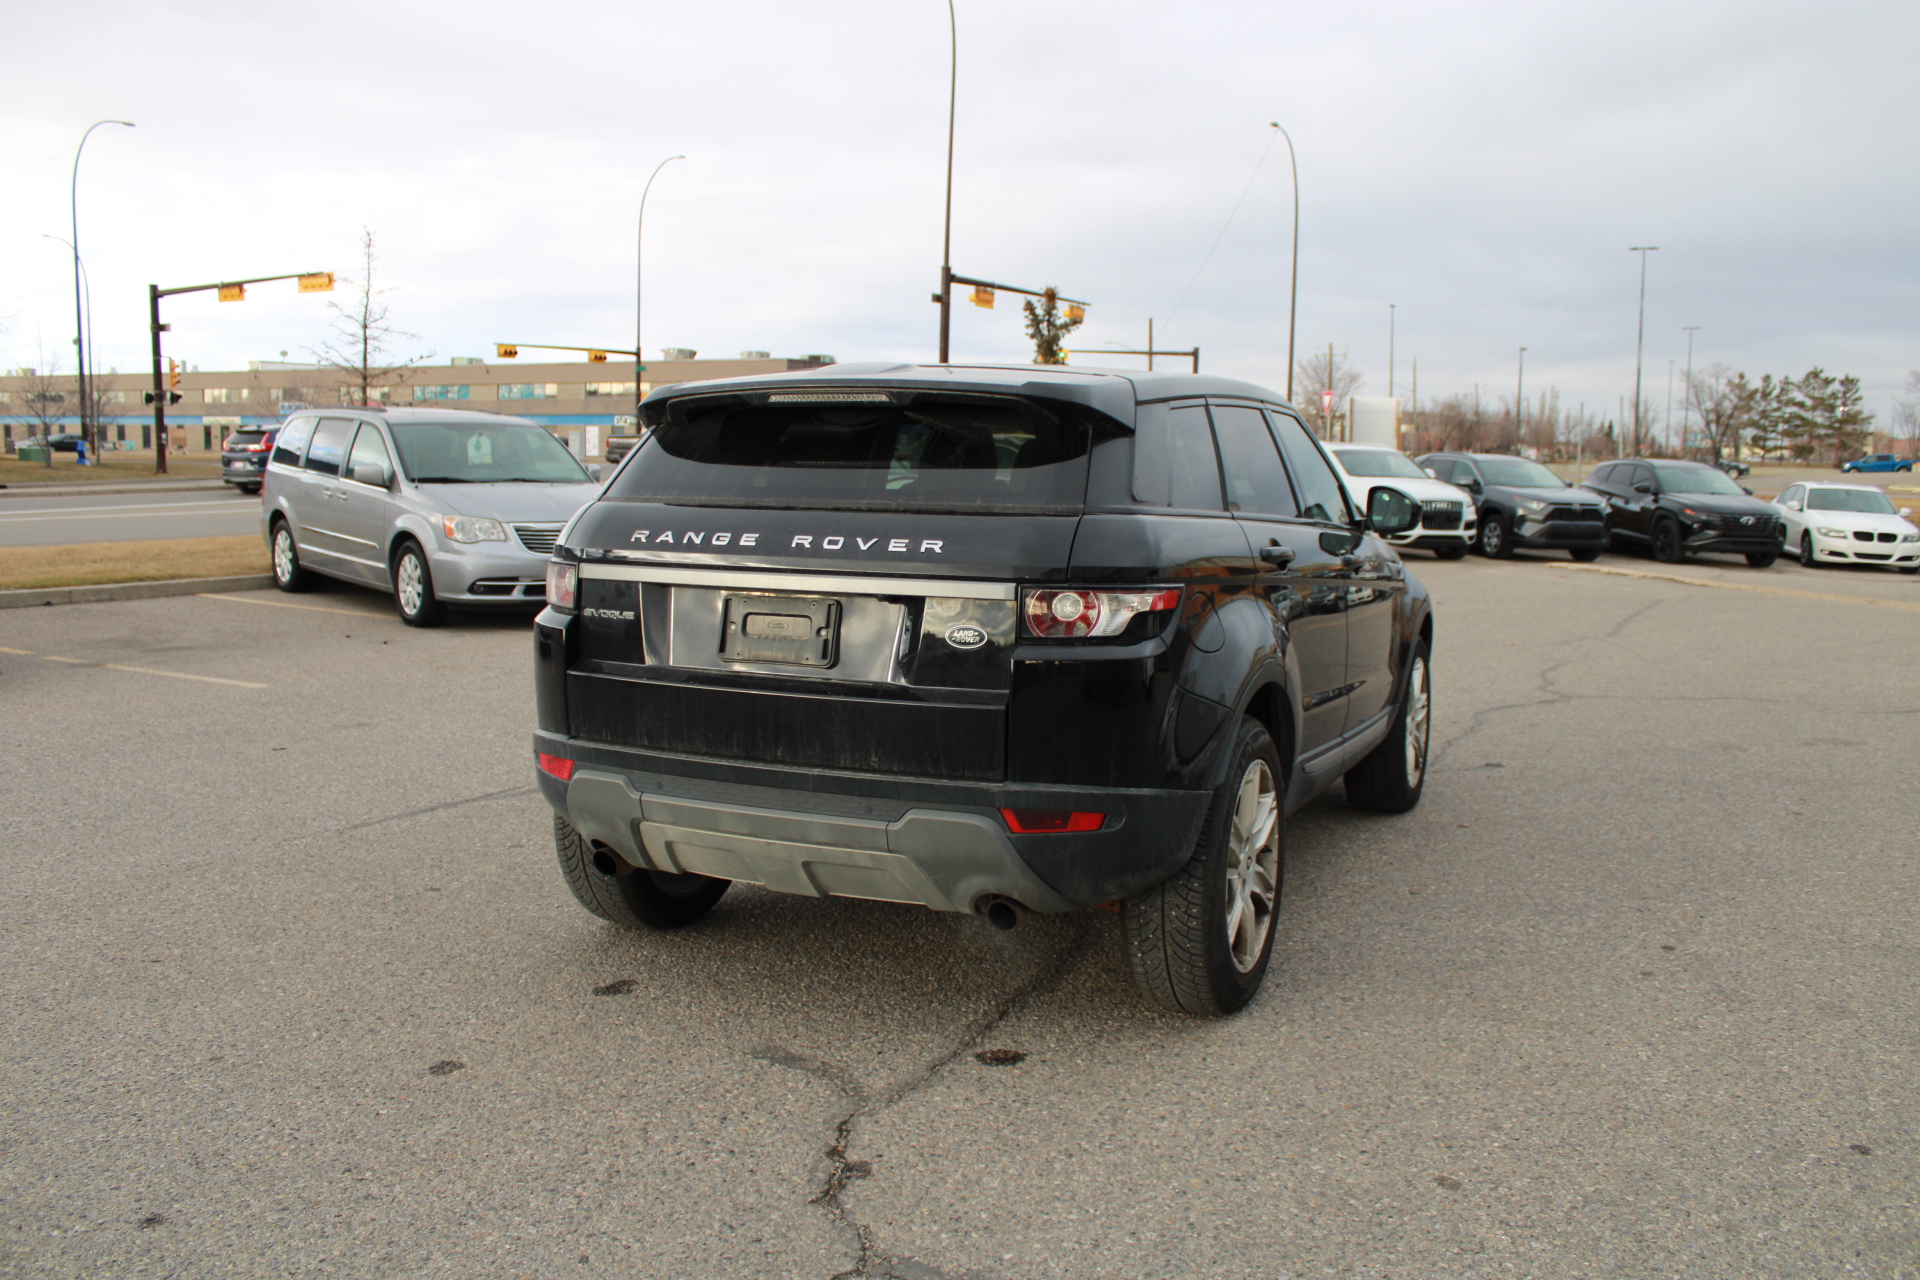 Preowned 2015 Land Rover Range Rover Evoque Pure Plus in Calgary Alberta